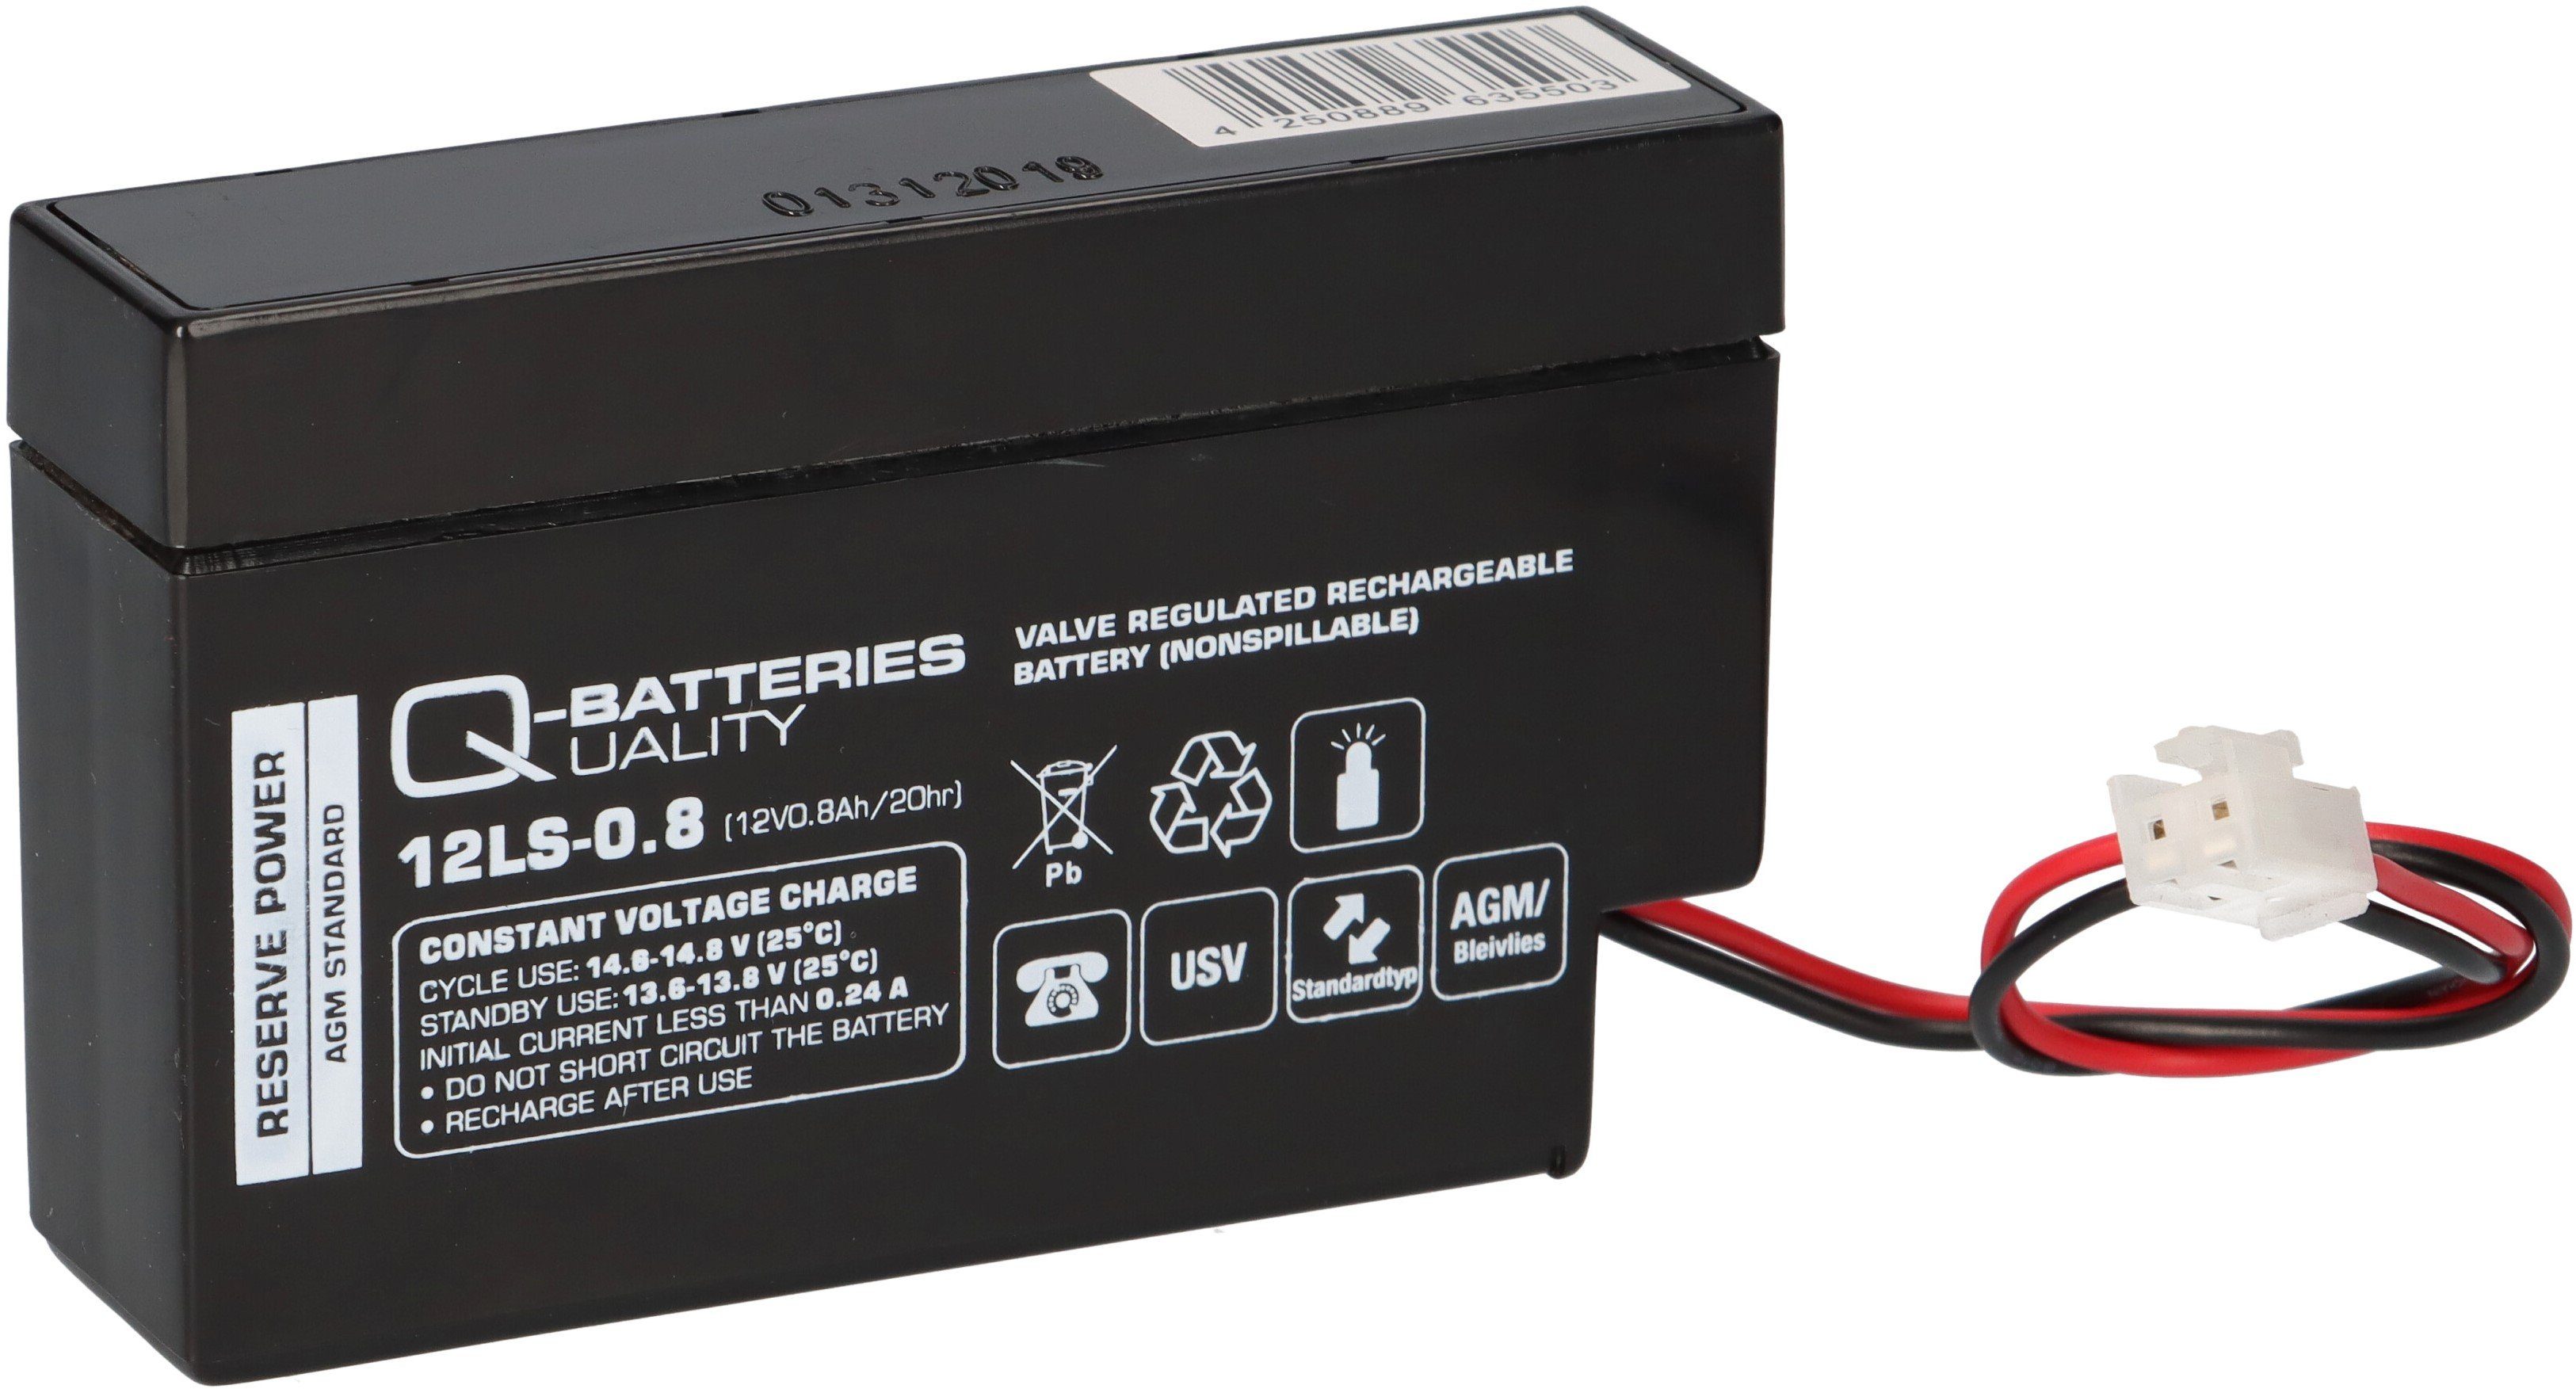 0,8Ah Blei-Vlies-Akku Q-Batteries mit Stecker Bleiakkus JST 12LS-0.8 AGM / 12V Q-Batteries